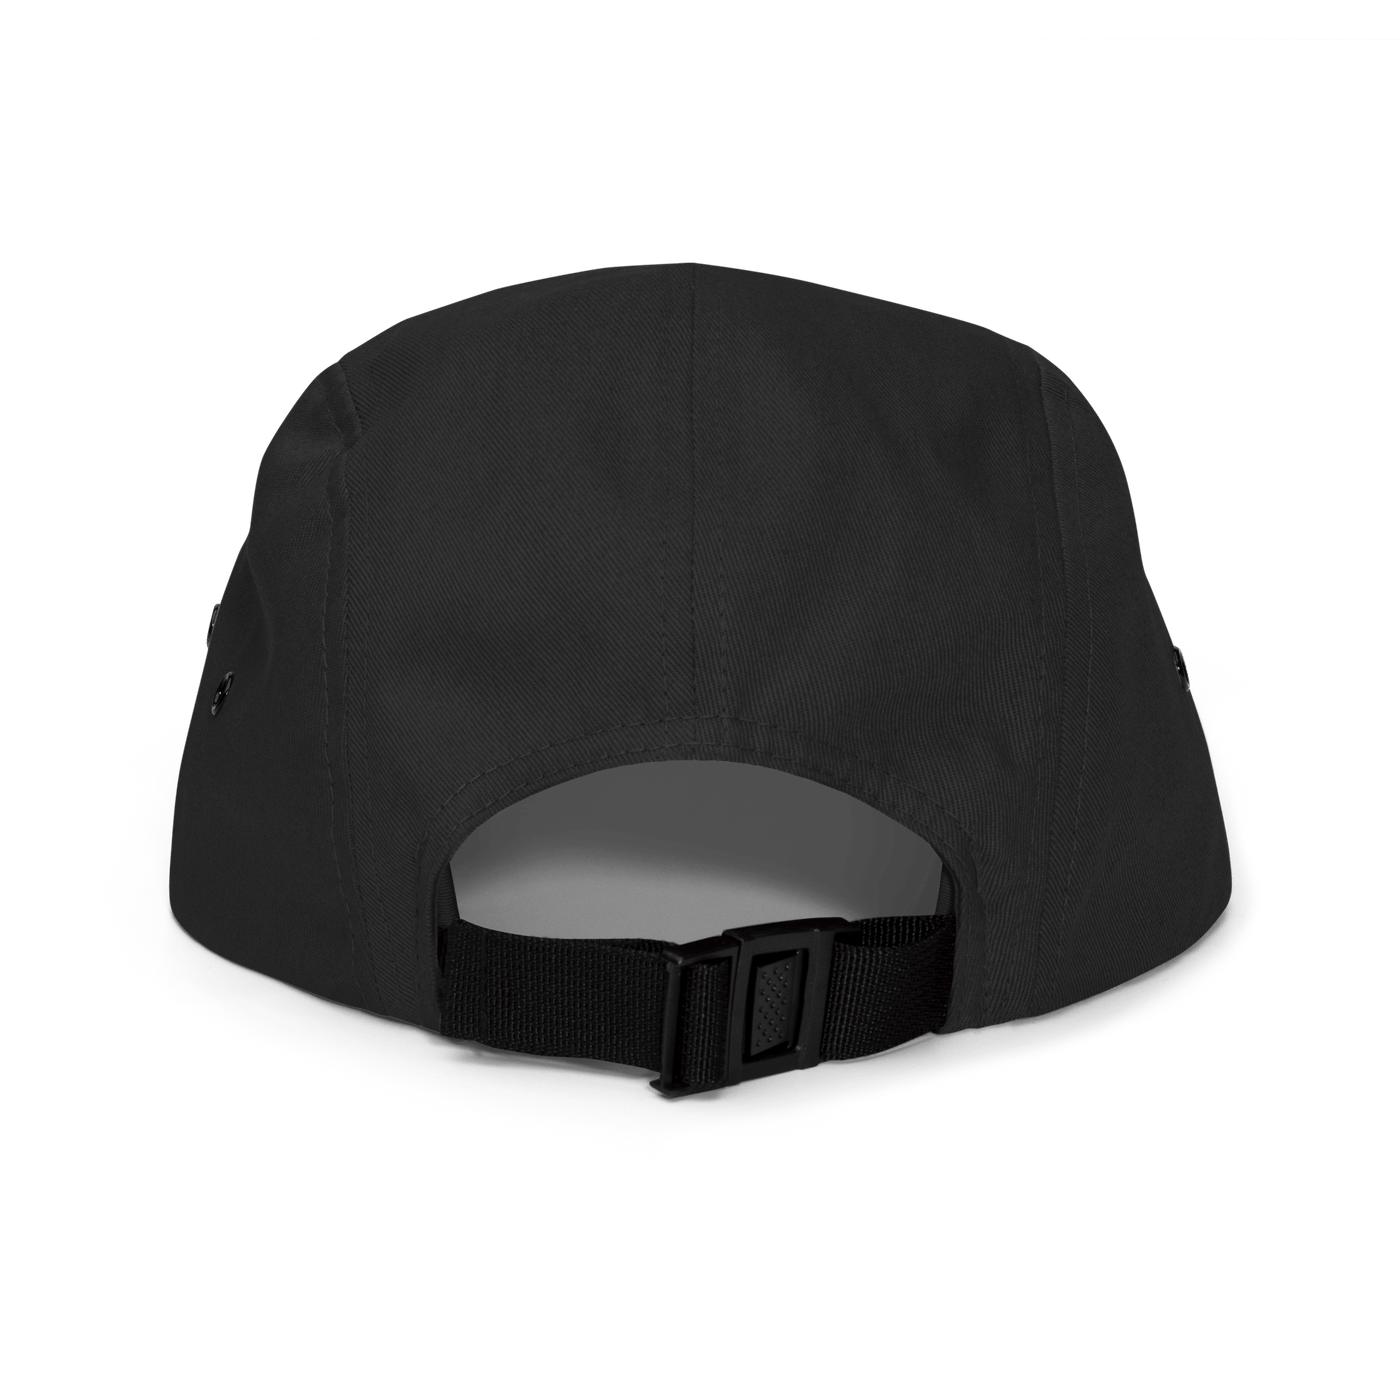 Noodles Five Panel Hat - Black - - Just Another Cap Store